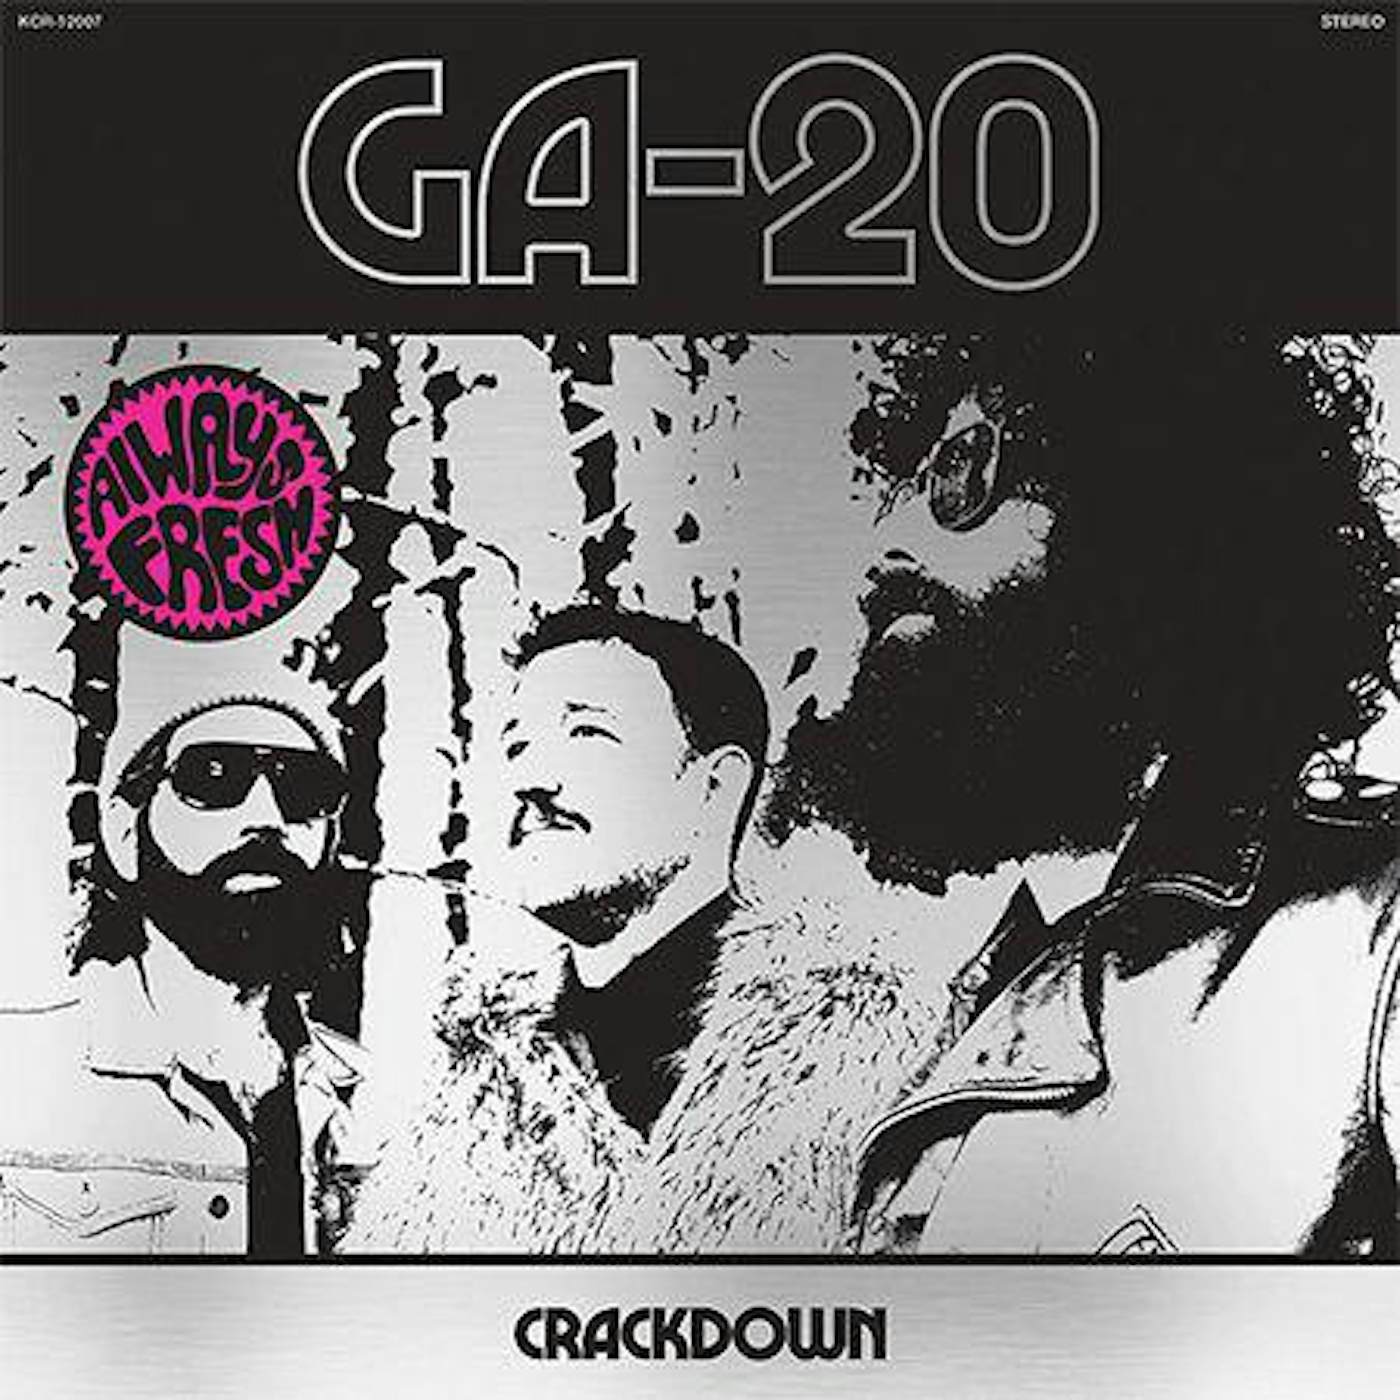 GA-20 Crackdown vinyl record